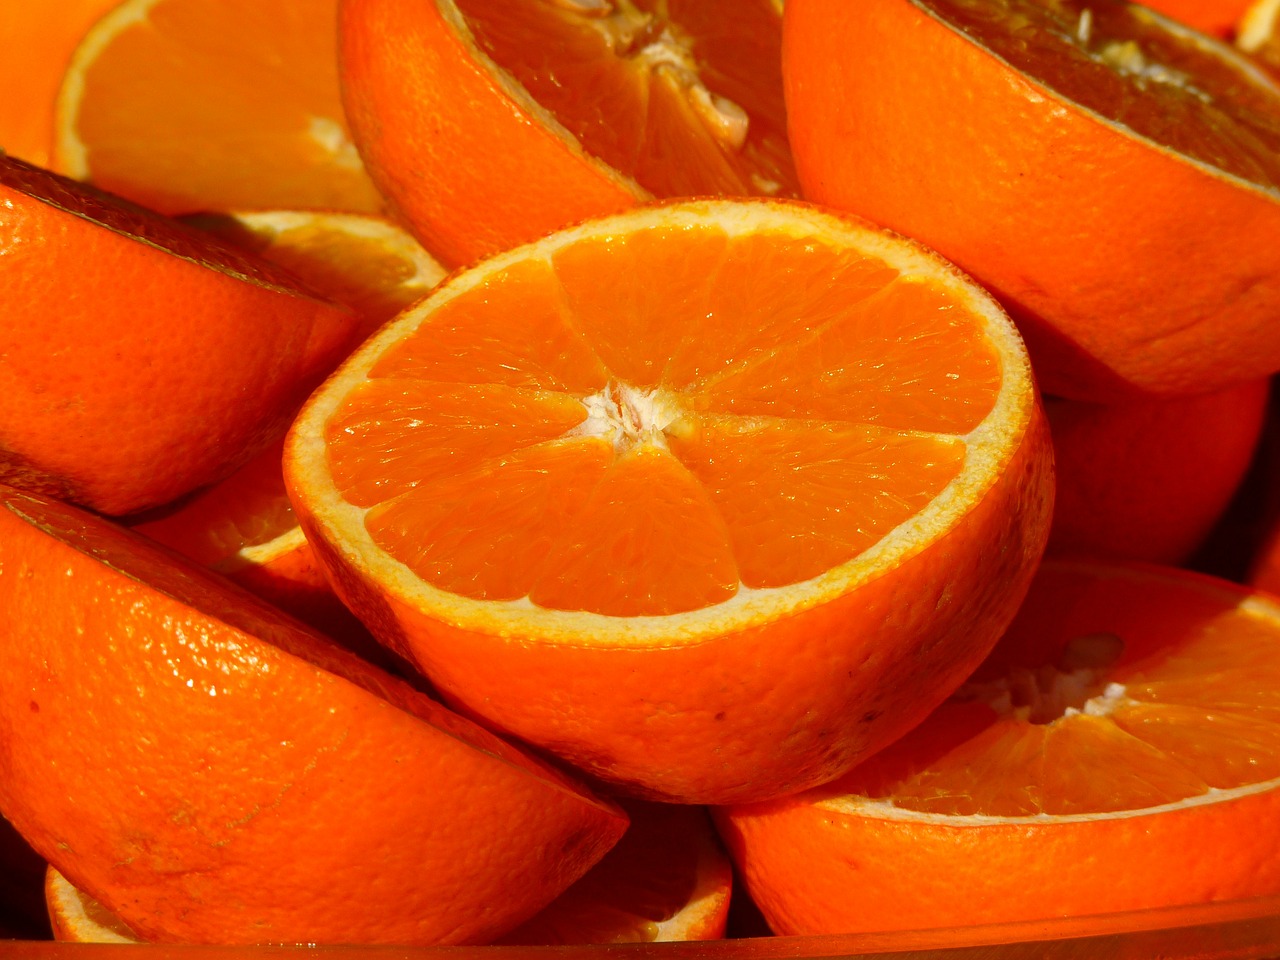 Wedding fruit oranges